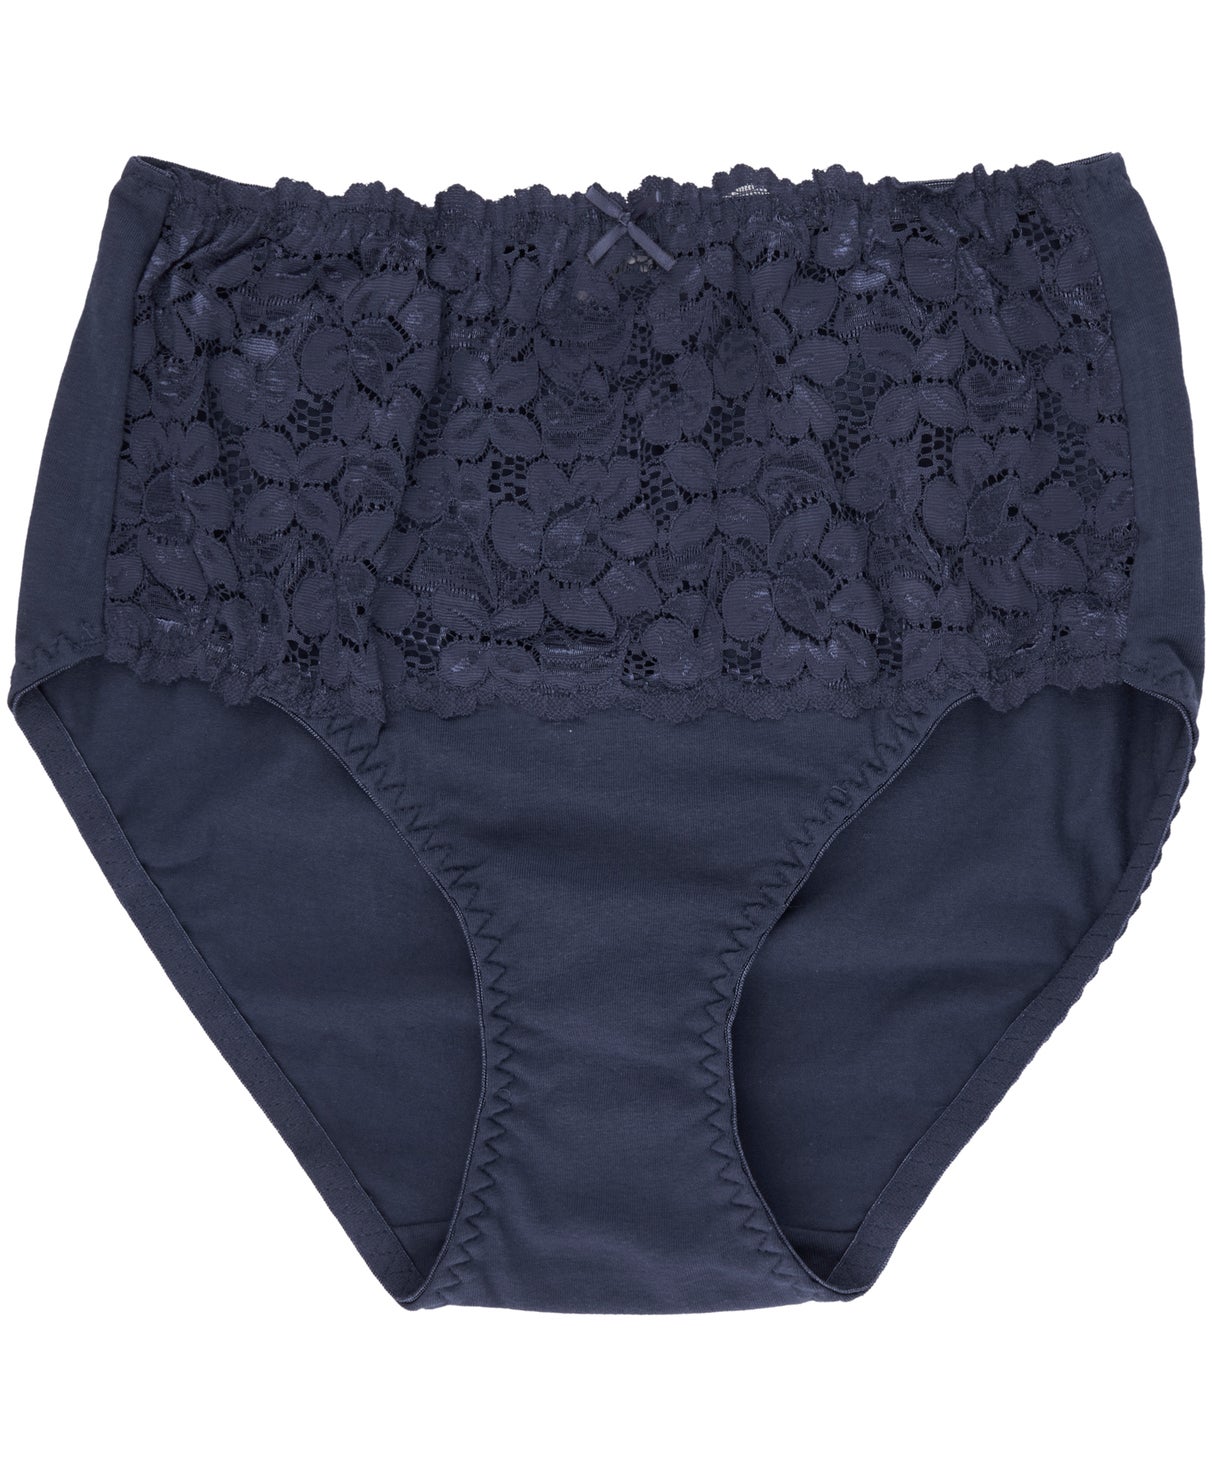 FEM Organic Cotton Underwear for Women Full Brief Women's Panties - 3 pk